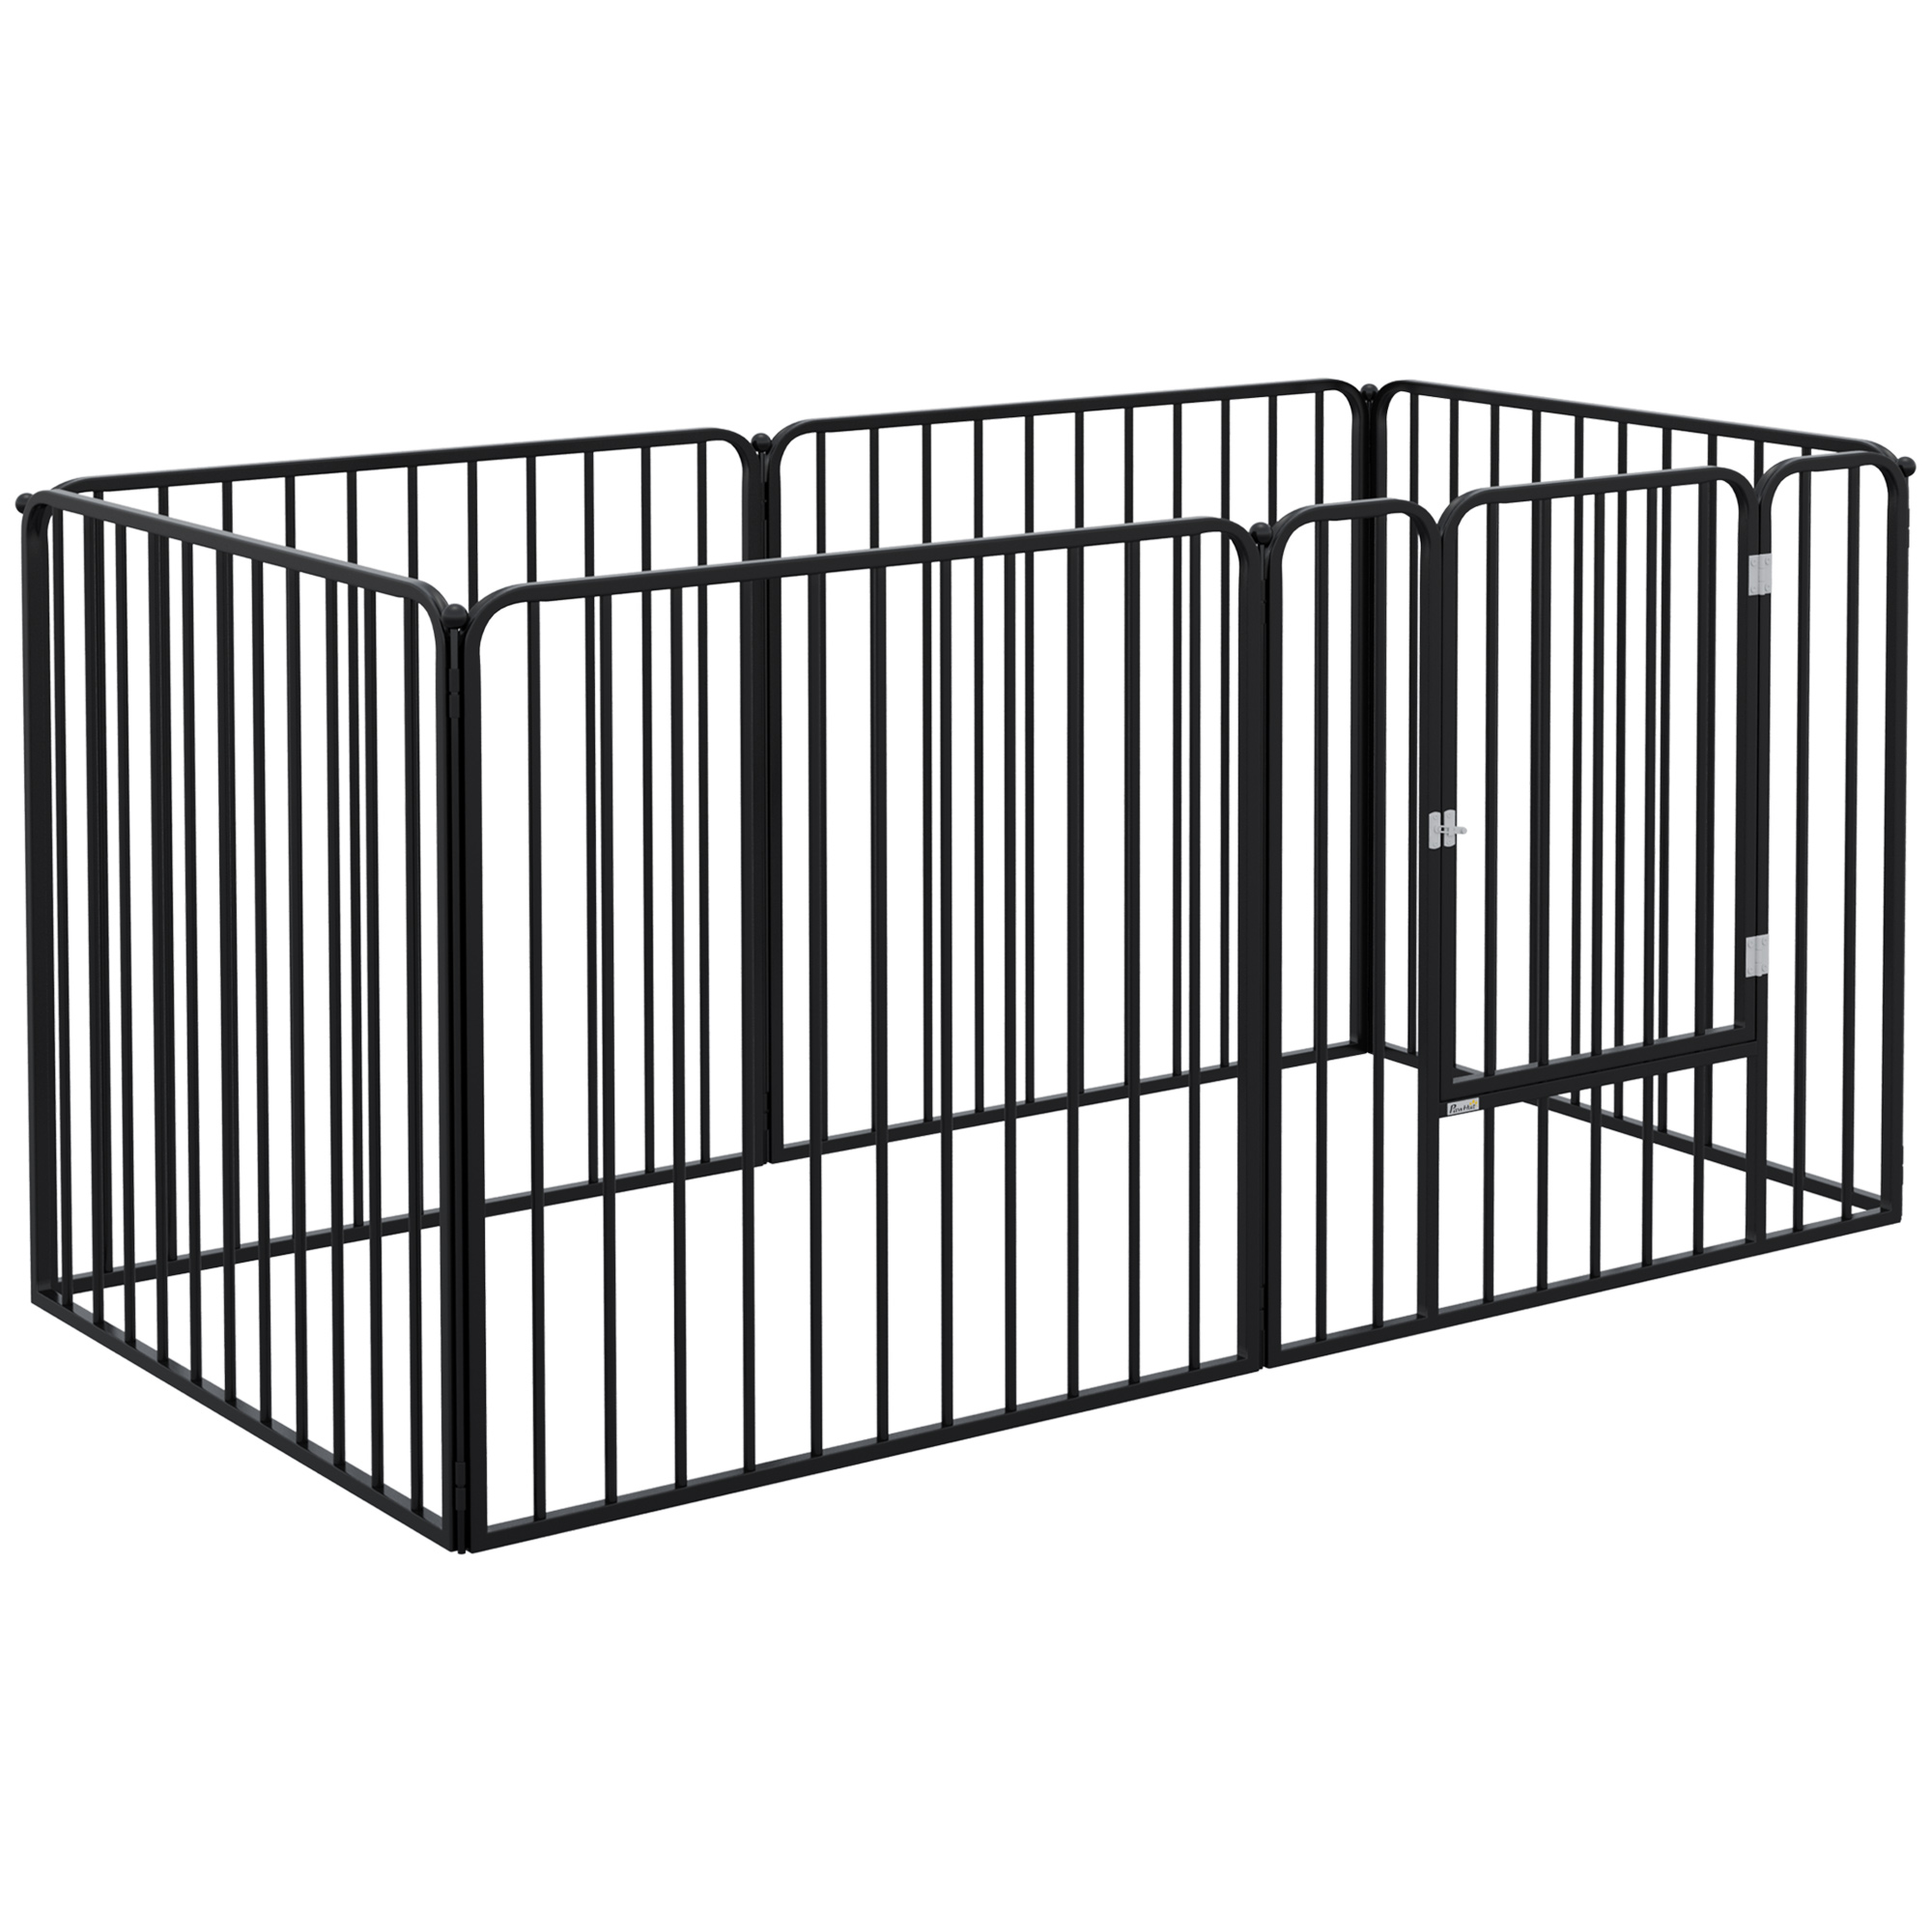 PawHut Dog Fence με 6 Modular Panel Indoor and Outdoor